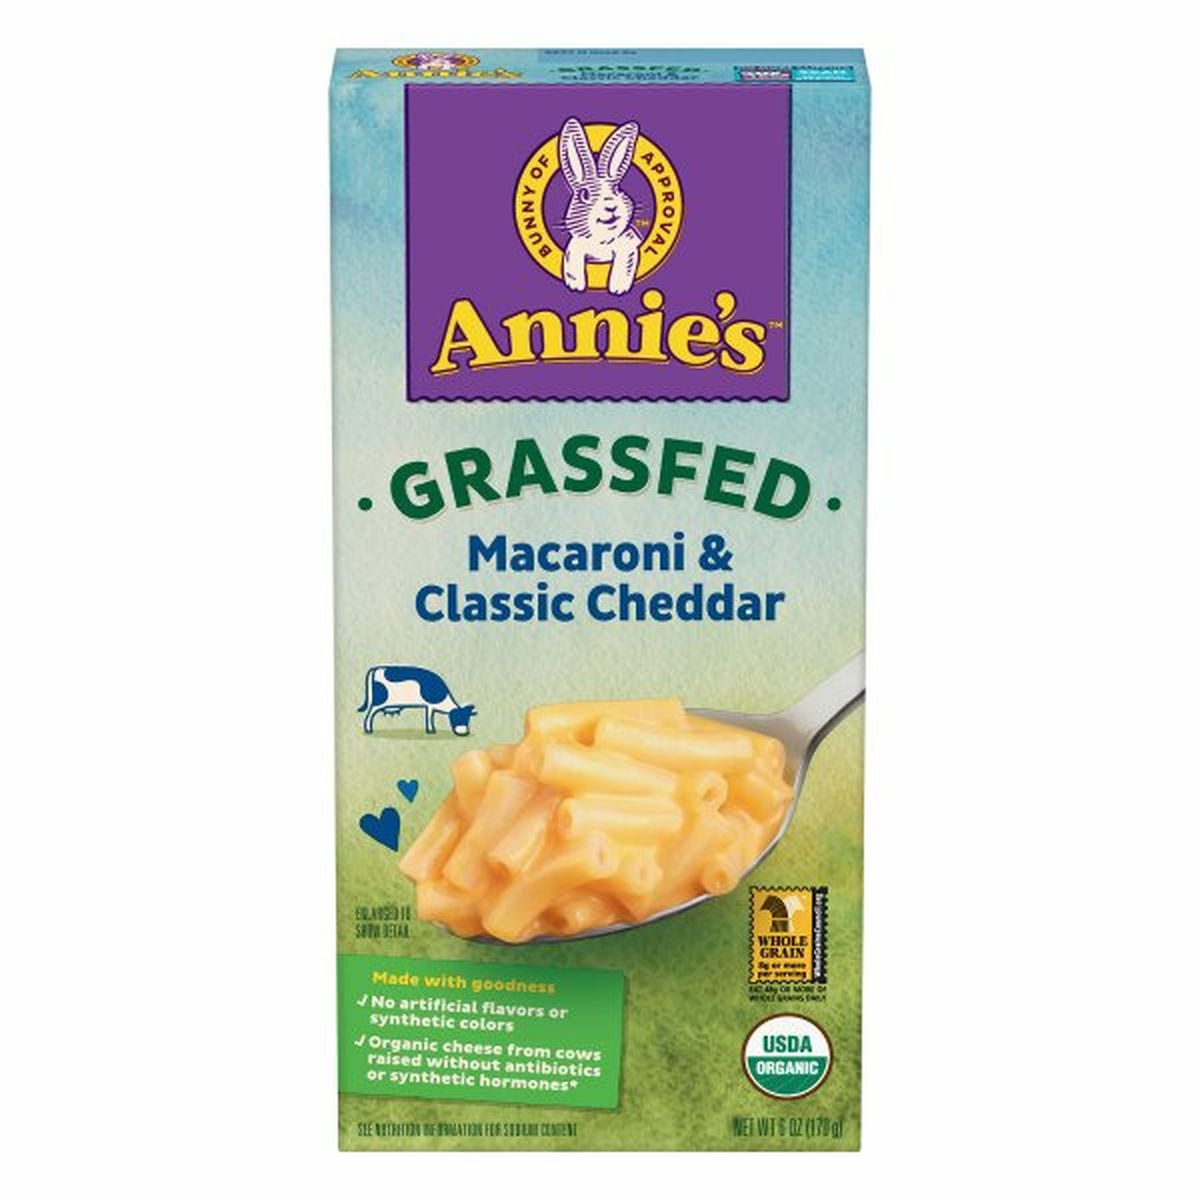 Calories in Annie's Macaroni & Classic Cheddar, Organic, Grassfed